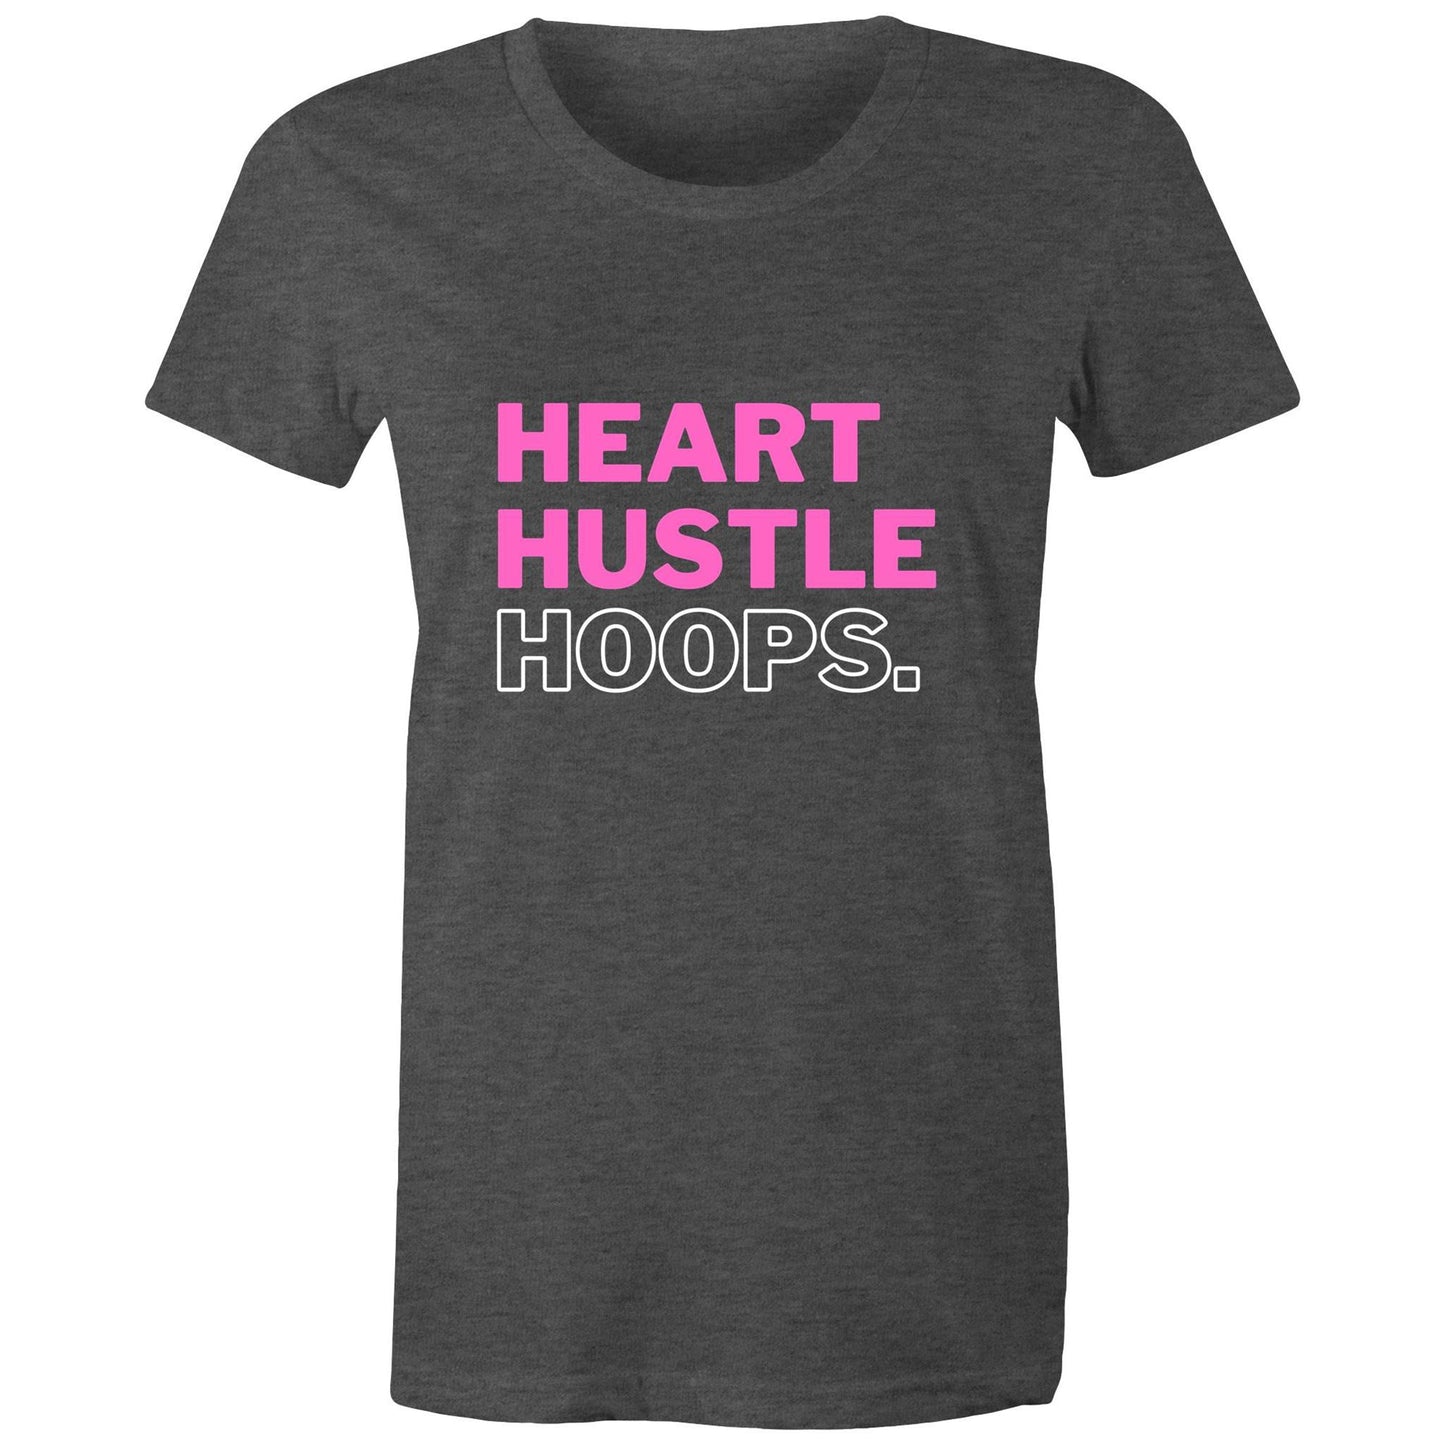 Heart Hustle Hoops (pink) - AS Colour - Women's Maple Tee